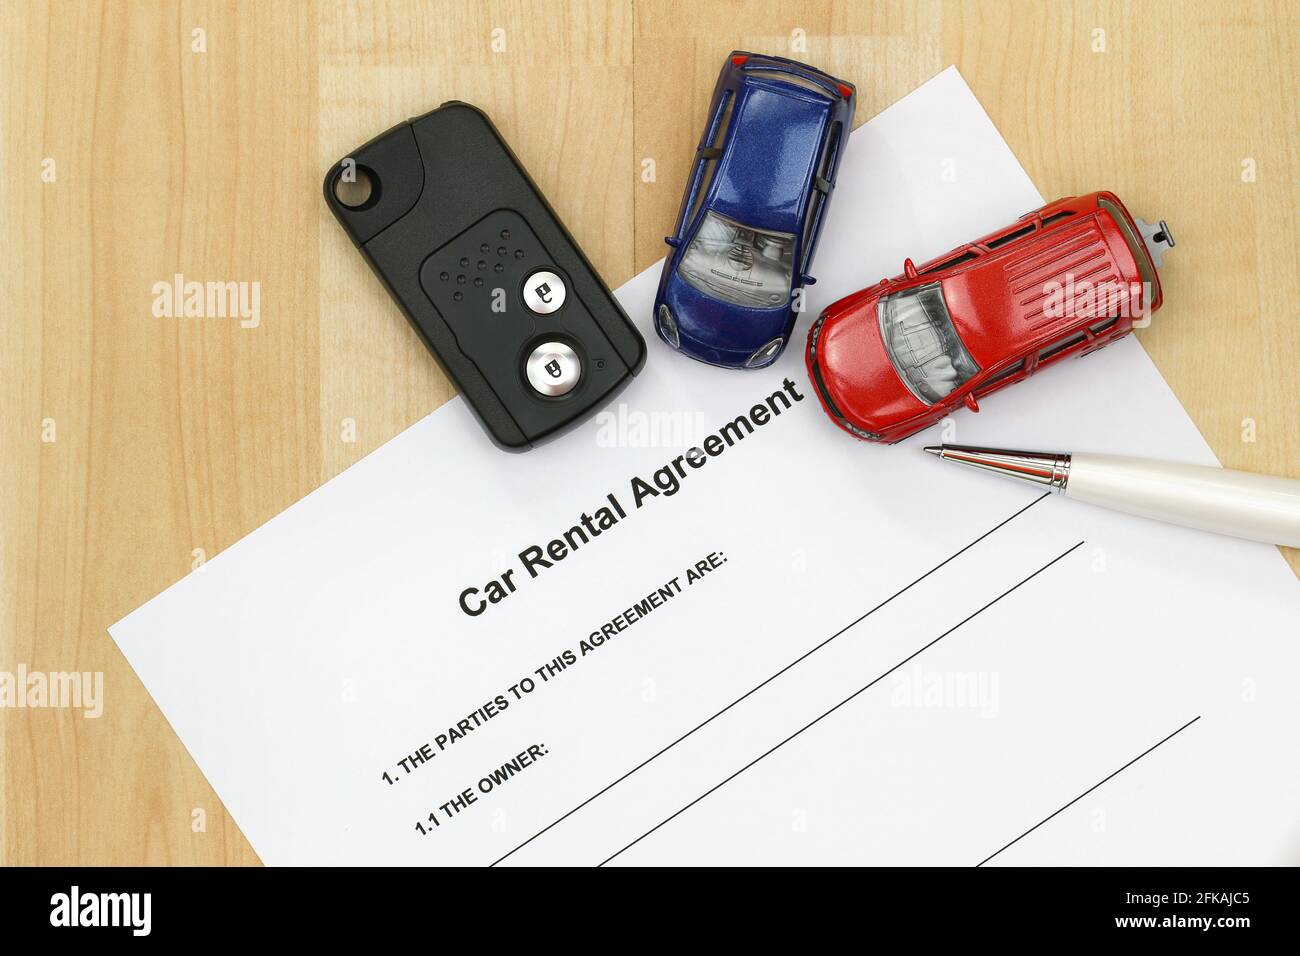 Closeup of car rental agreement paper next to a remote car key, a pen and mini car models Stock Photo